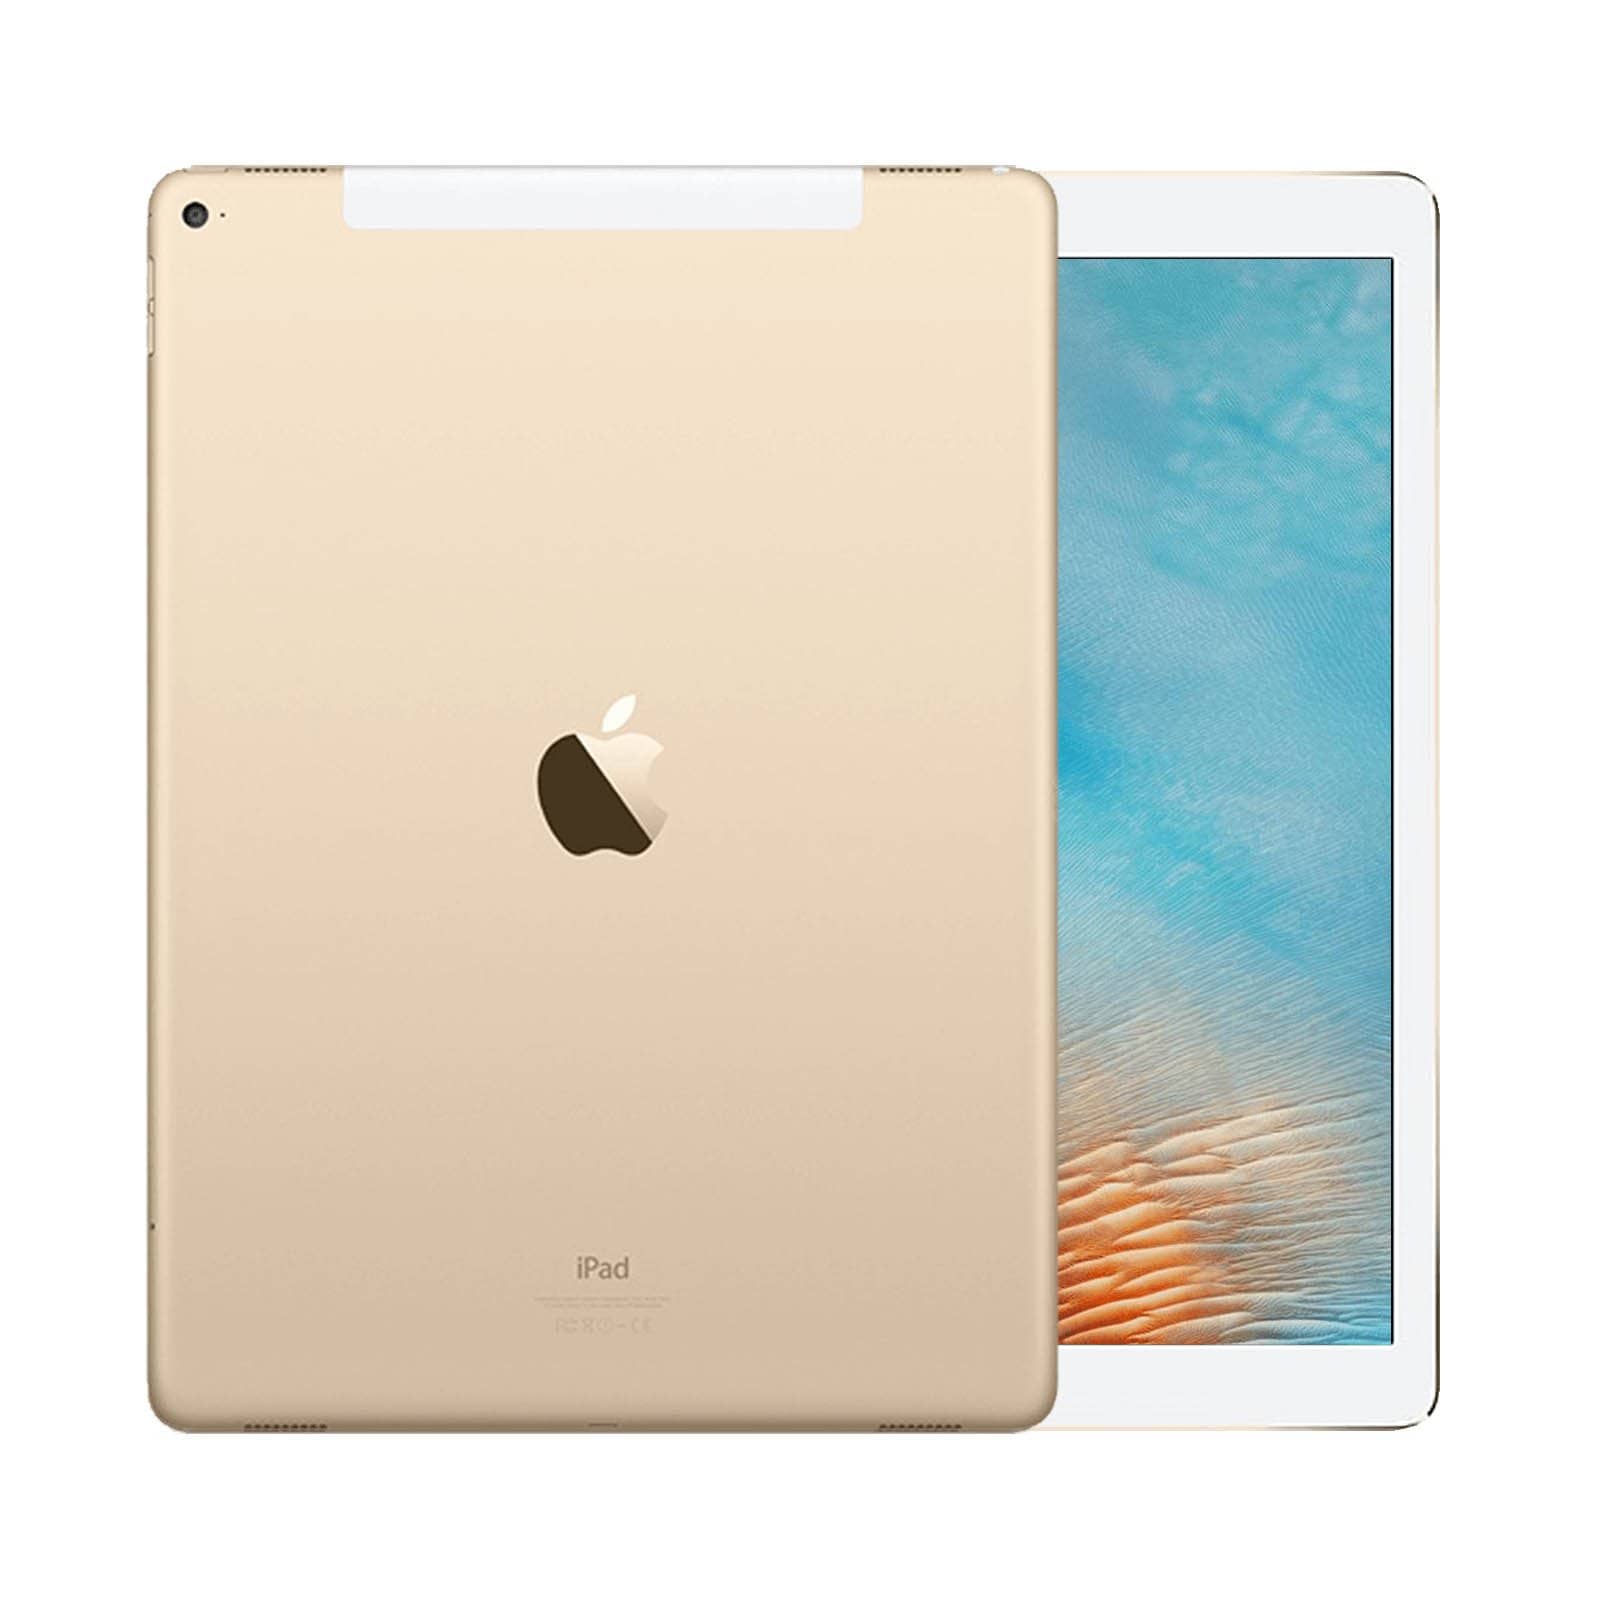 iPad Pro 12.9 Inch 2nd Gen 512GB Gold Very Good - WiFi 512GB Gold Very Good